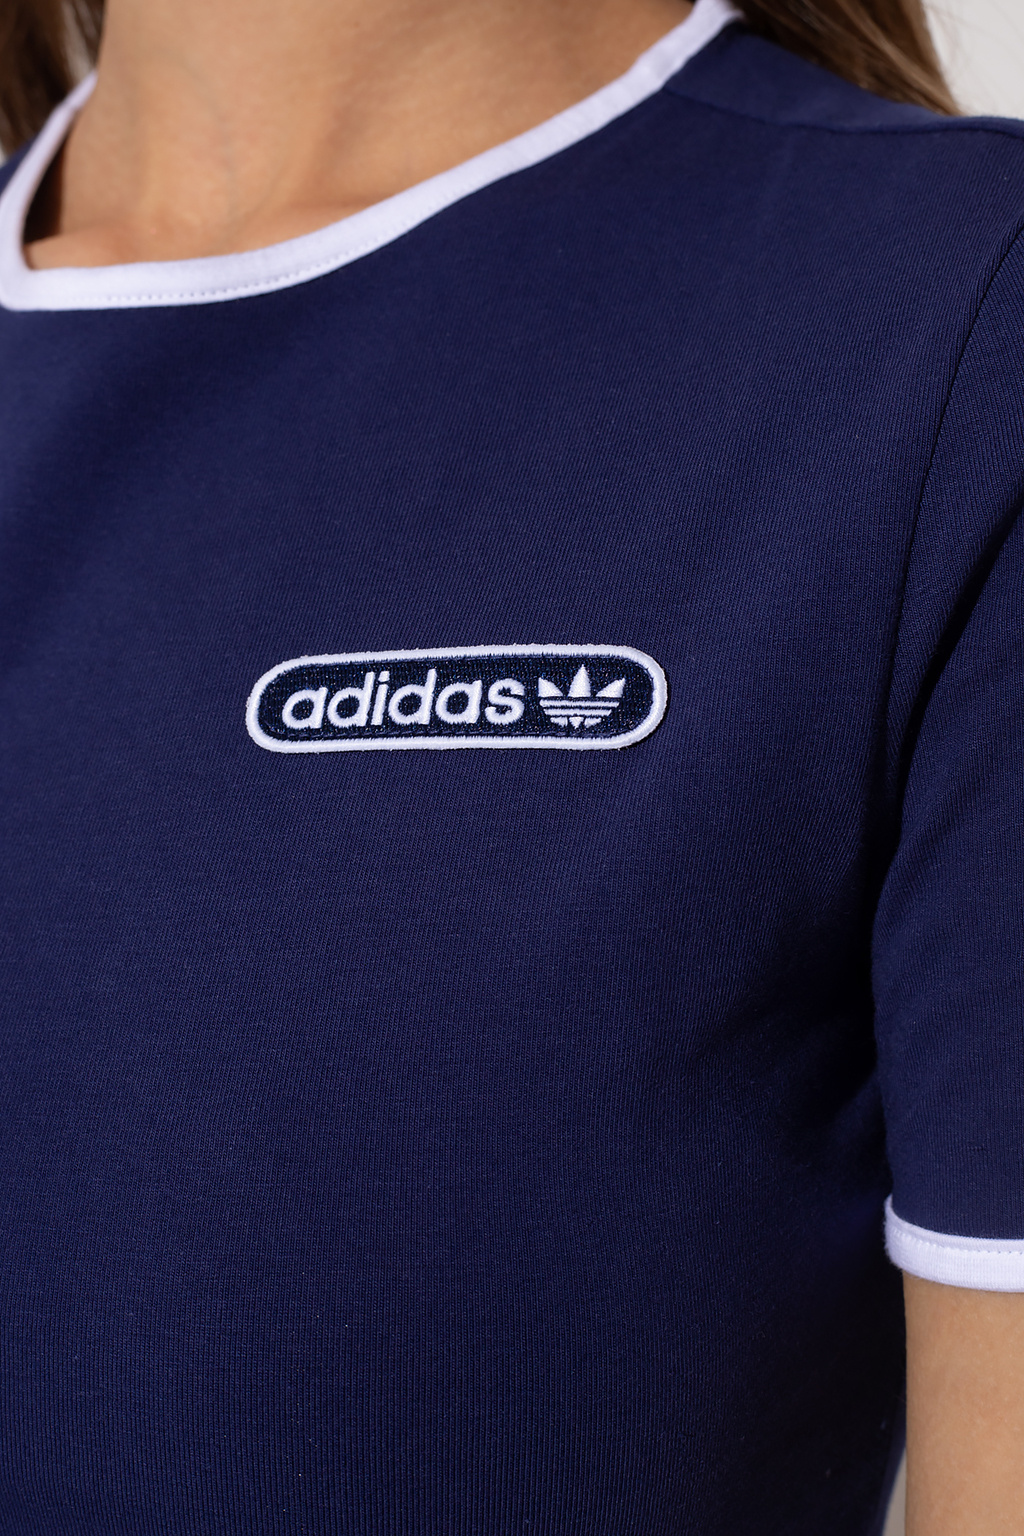 Australia Logo Tights Originals IetpShops Junior - ADIDAS Navy shirt - 3 - Entraînement blue Filles Stripe adidas T